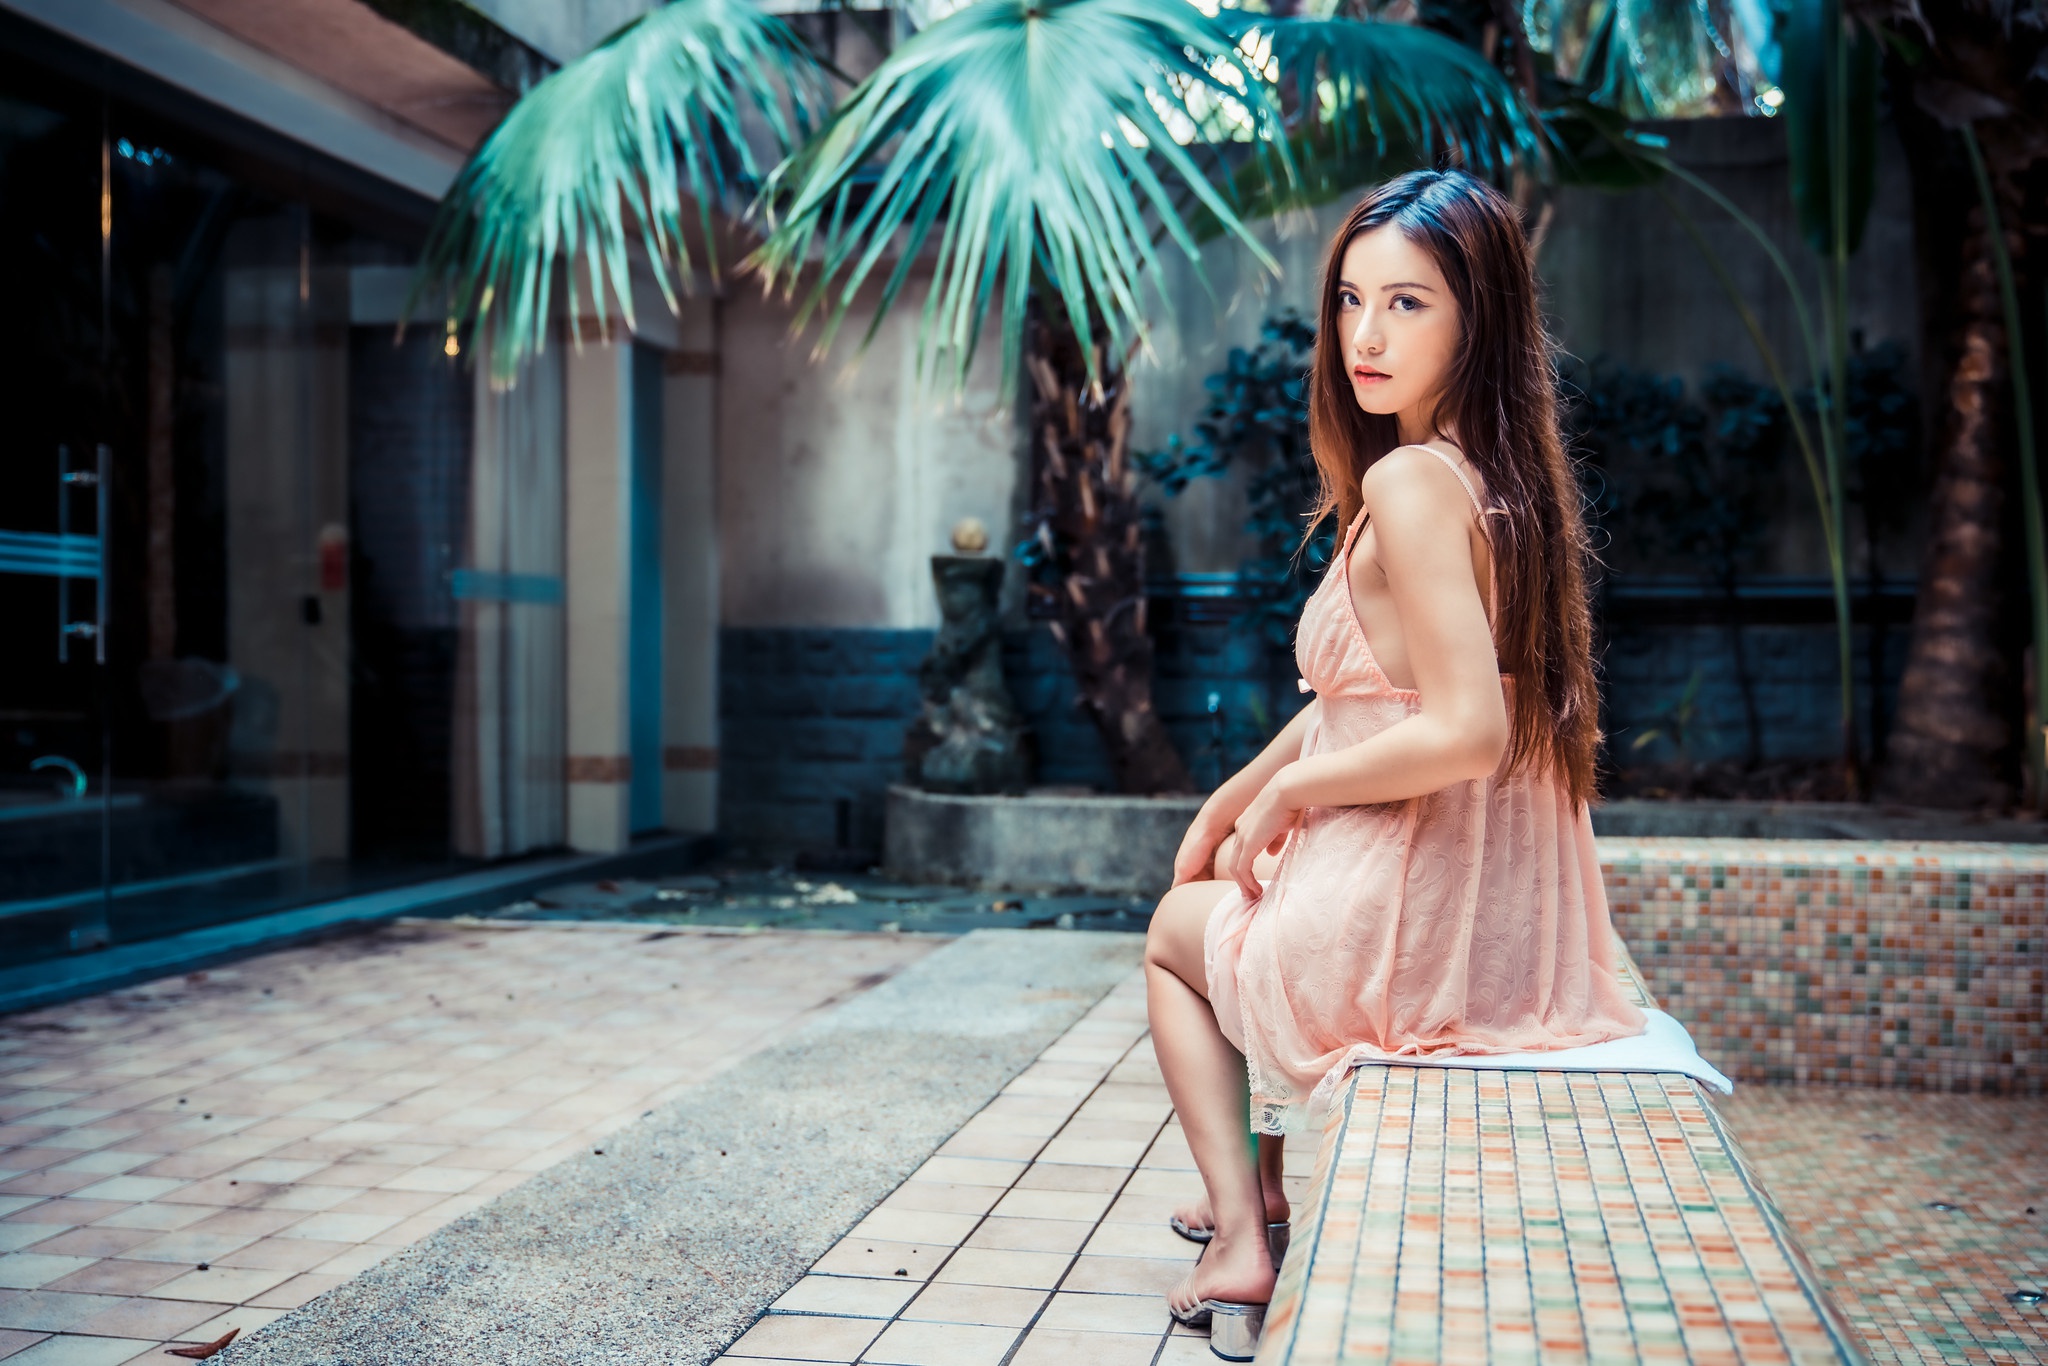 People 2048x1366 Asian model women long hair brunette sitting dress palm trees barefoot sandal